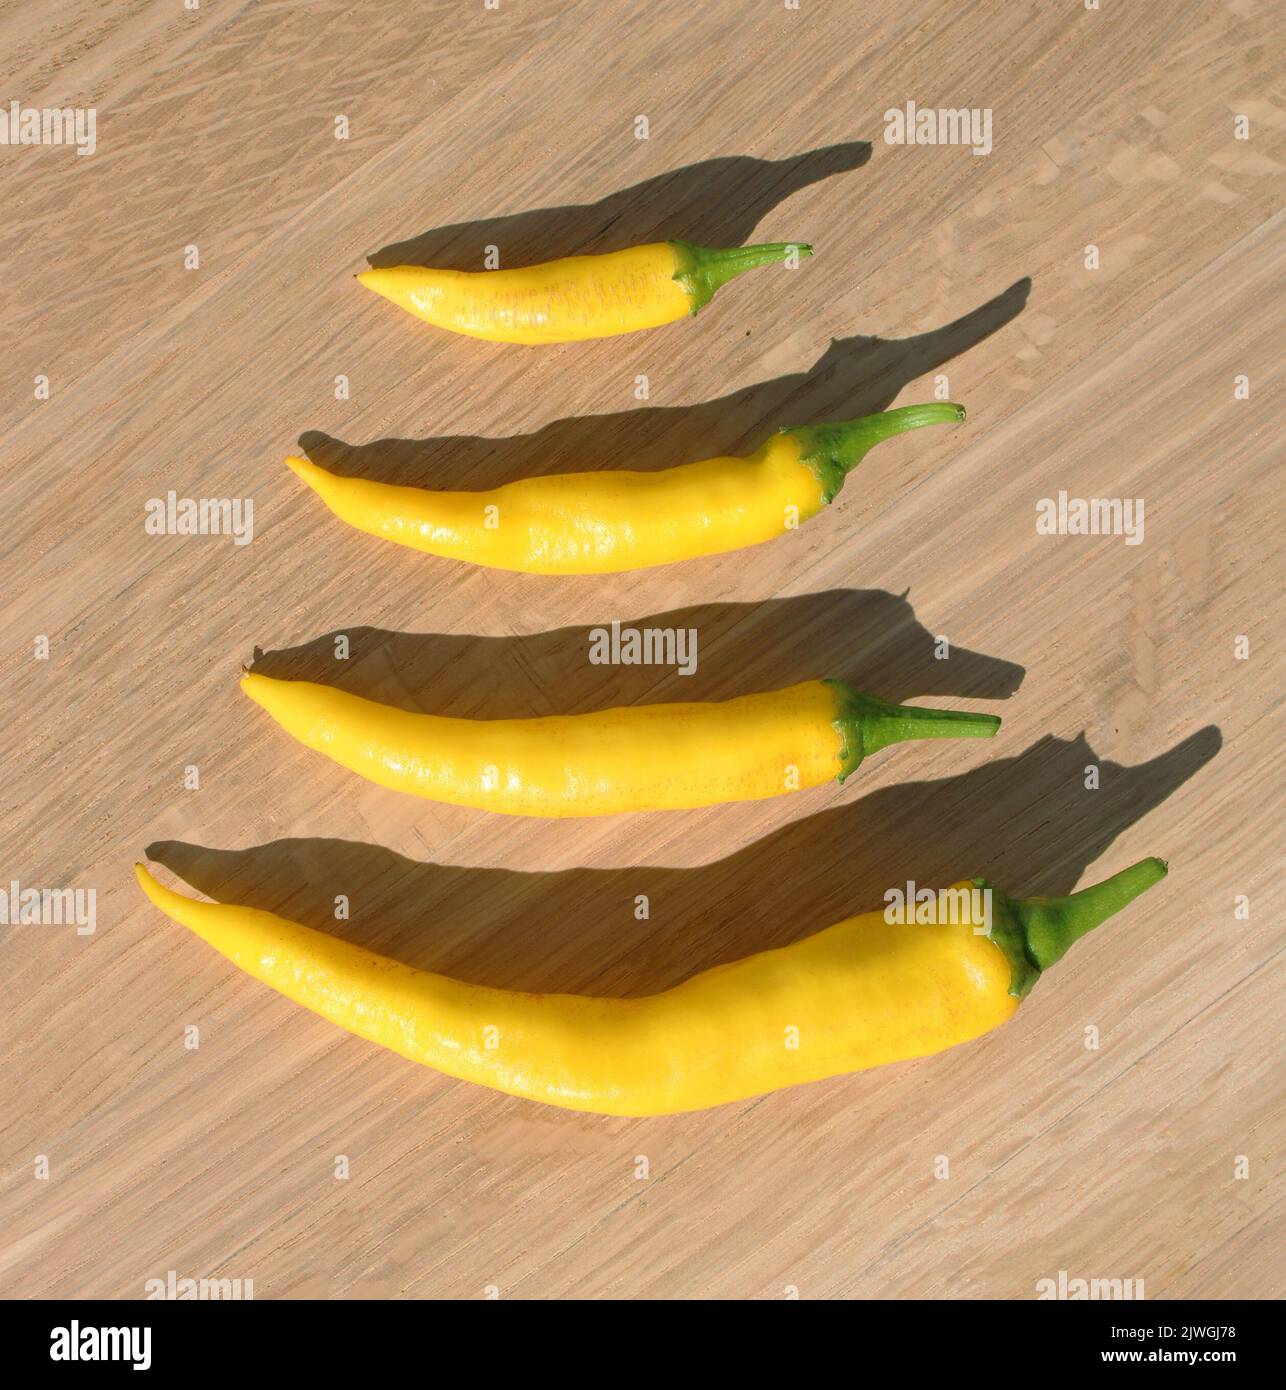 Un gruppo di peperoni caldi gialli di lunghezze diverse Foto Stock